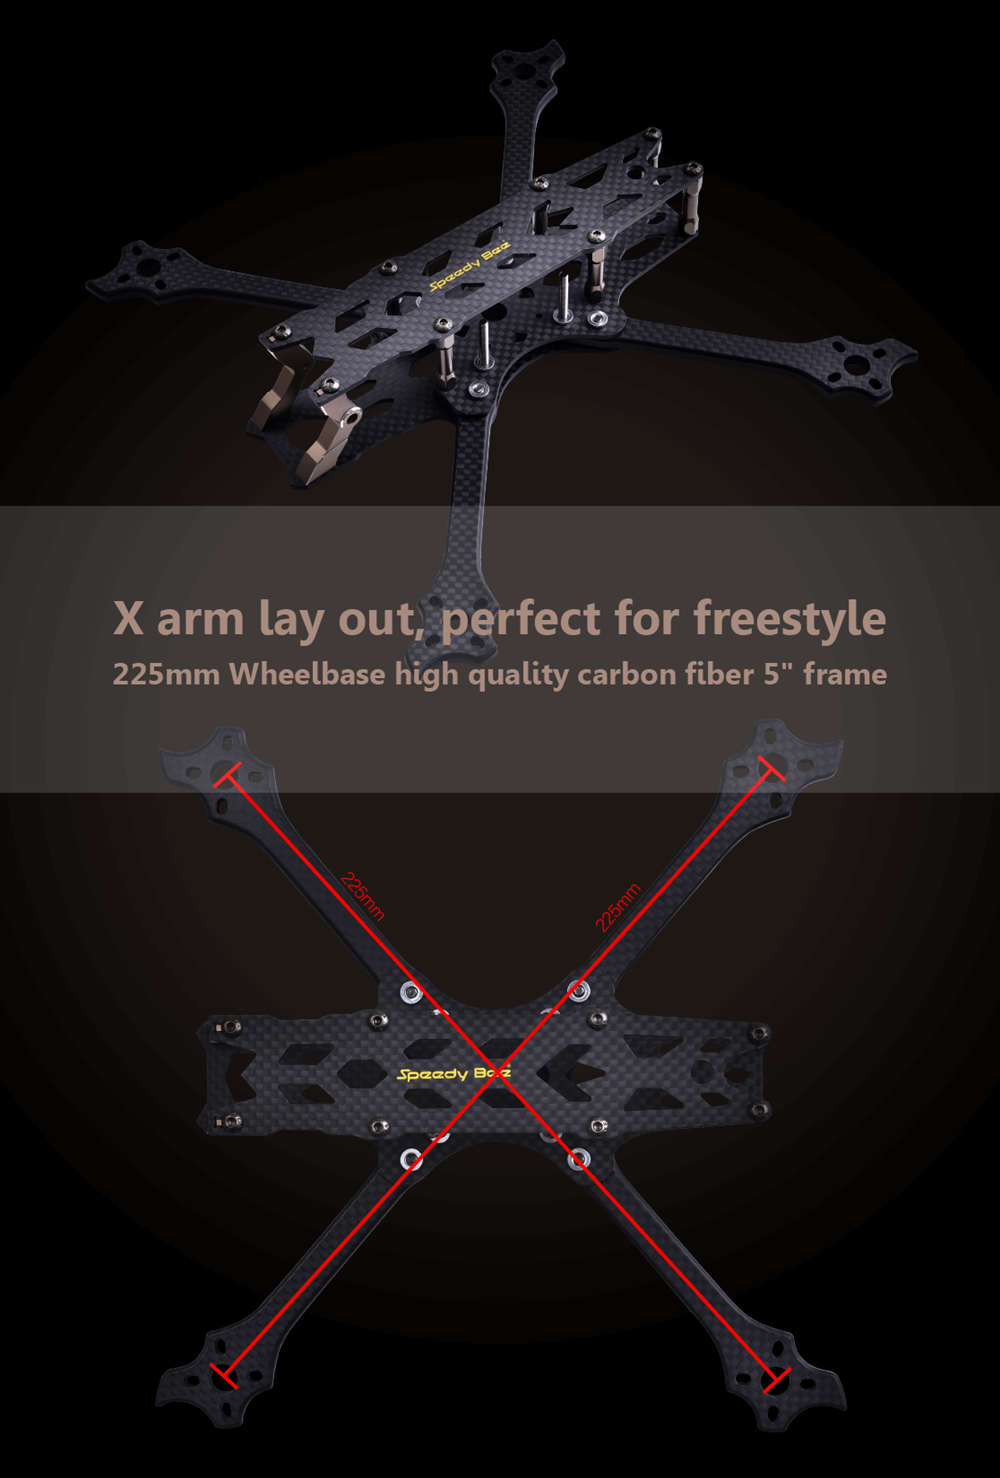 Speedy Bee 225mm Wheelbase 5mm Arm 3K Carbon Fiber Frame Kit for RC Drone FPV Racing